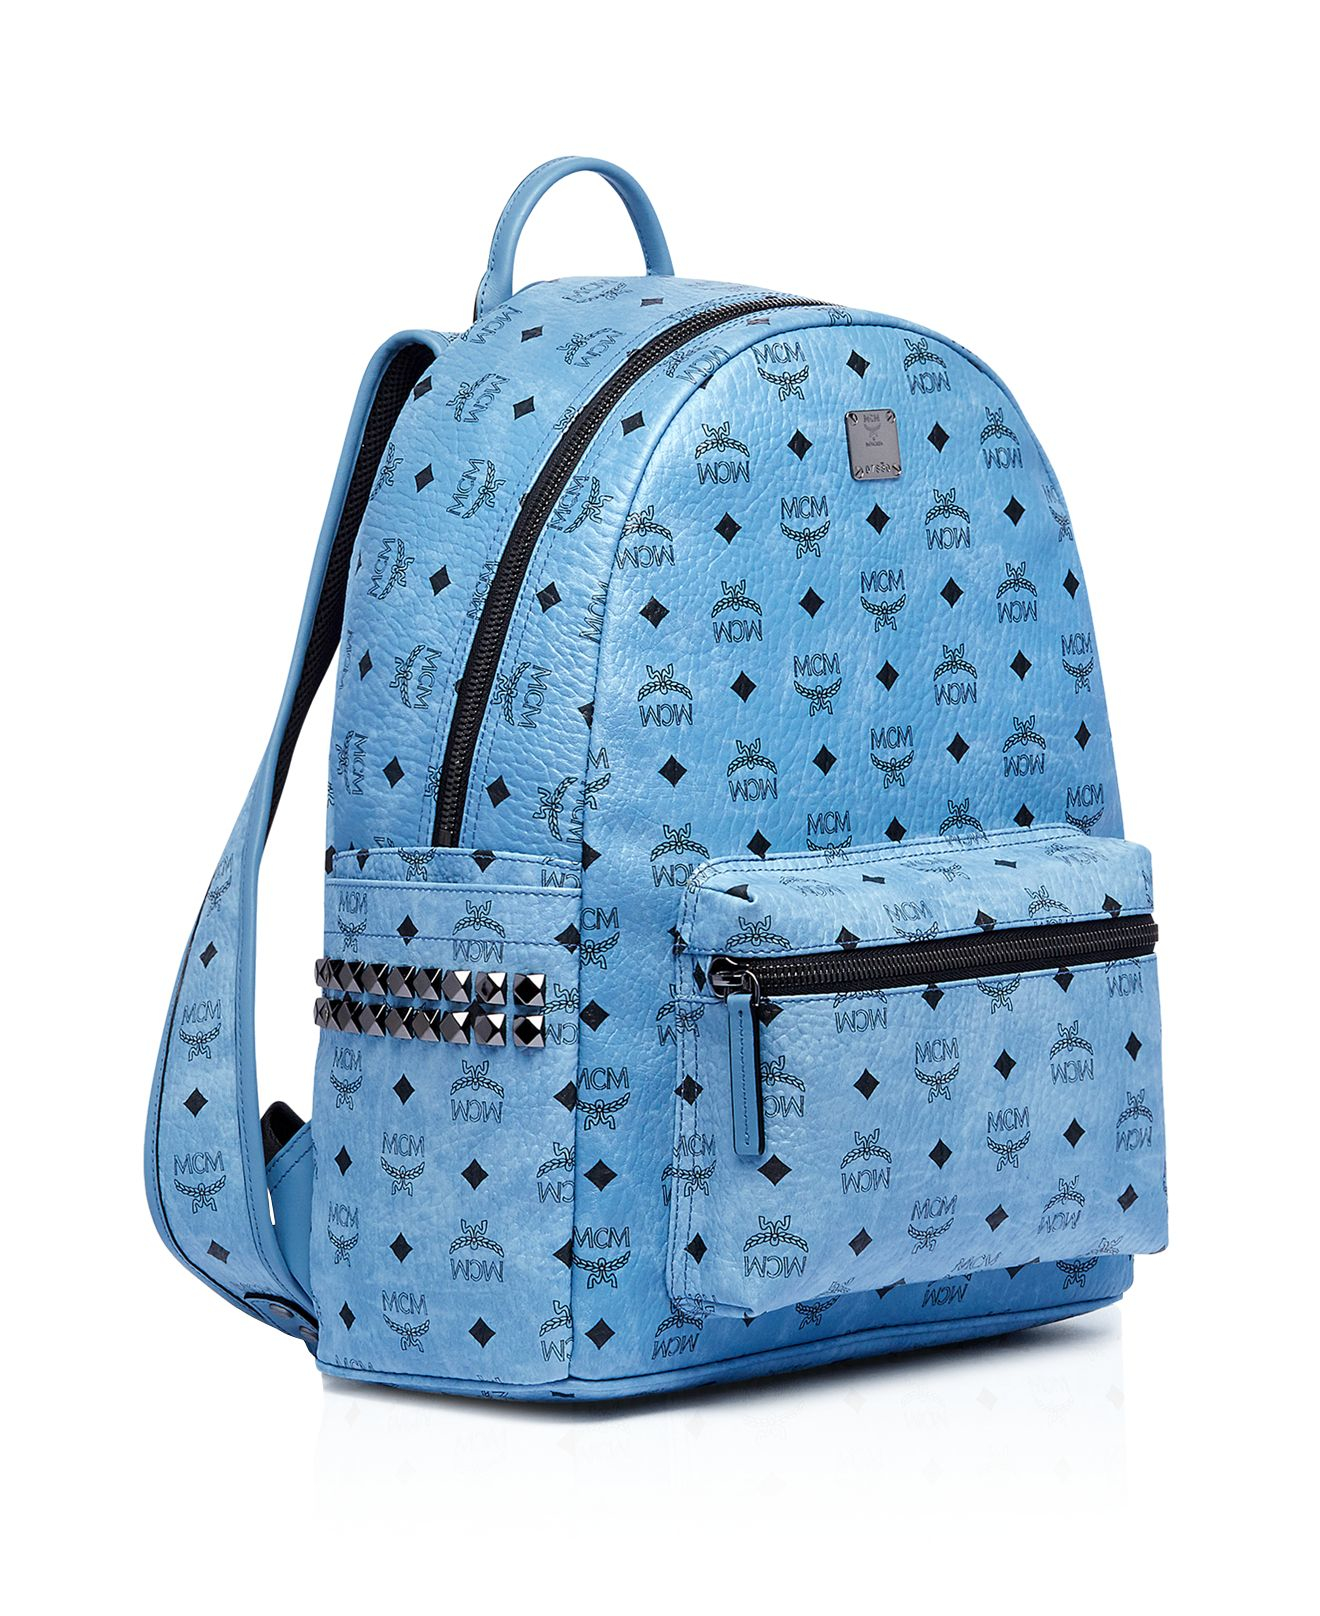 Lyst - Mcm Stark Side Stud Backpack in Blue for Men